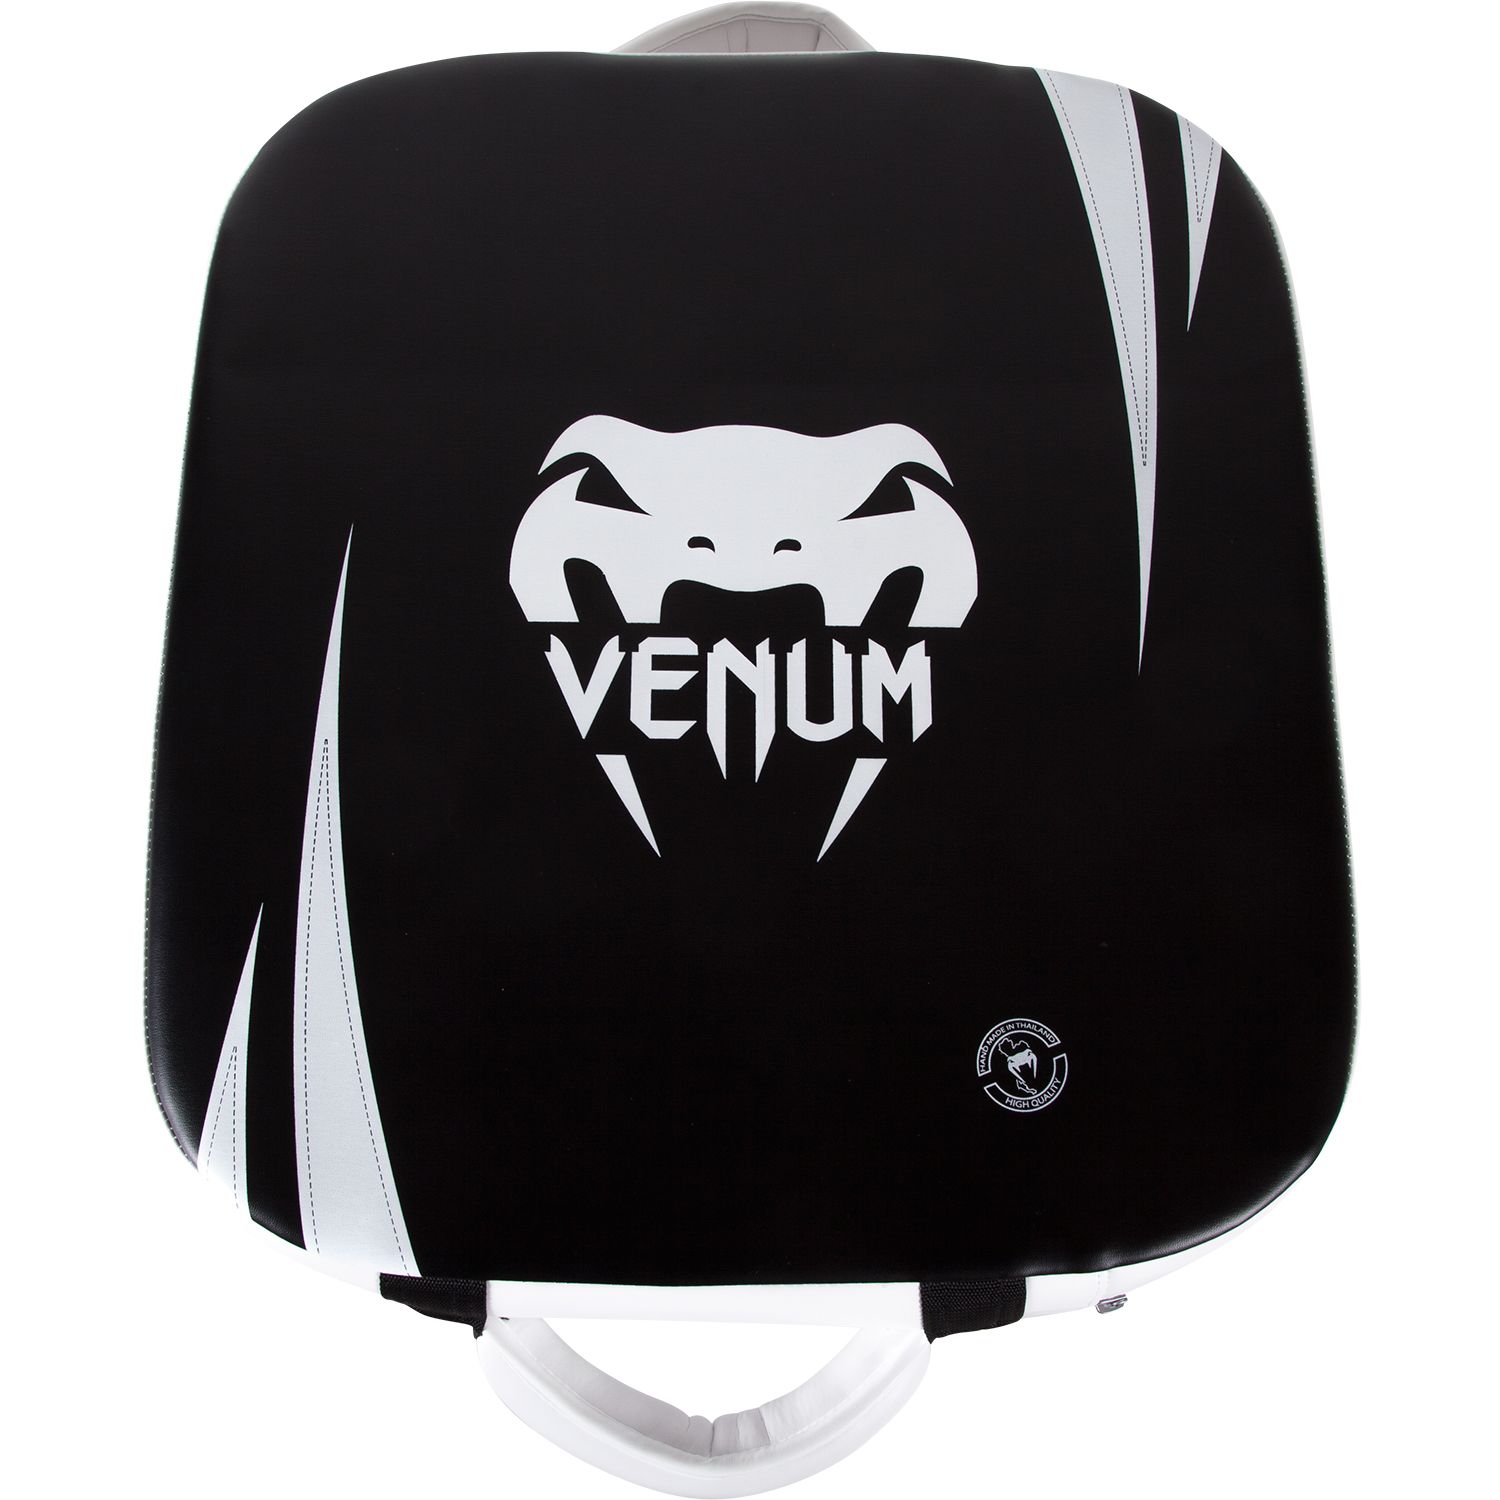 Venum Absolute Square Kick Shield - skintex-leer - zwart/ice